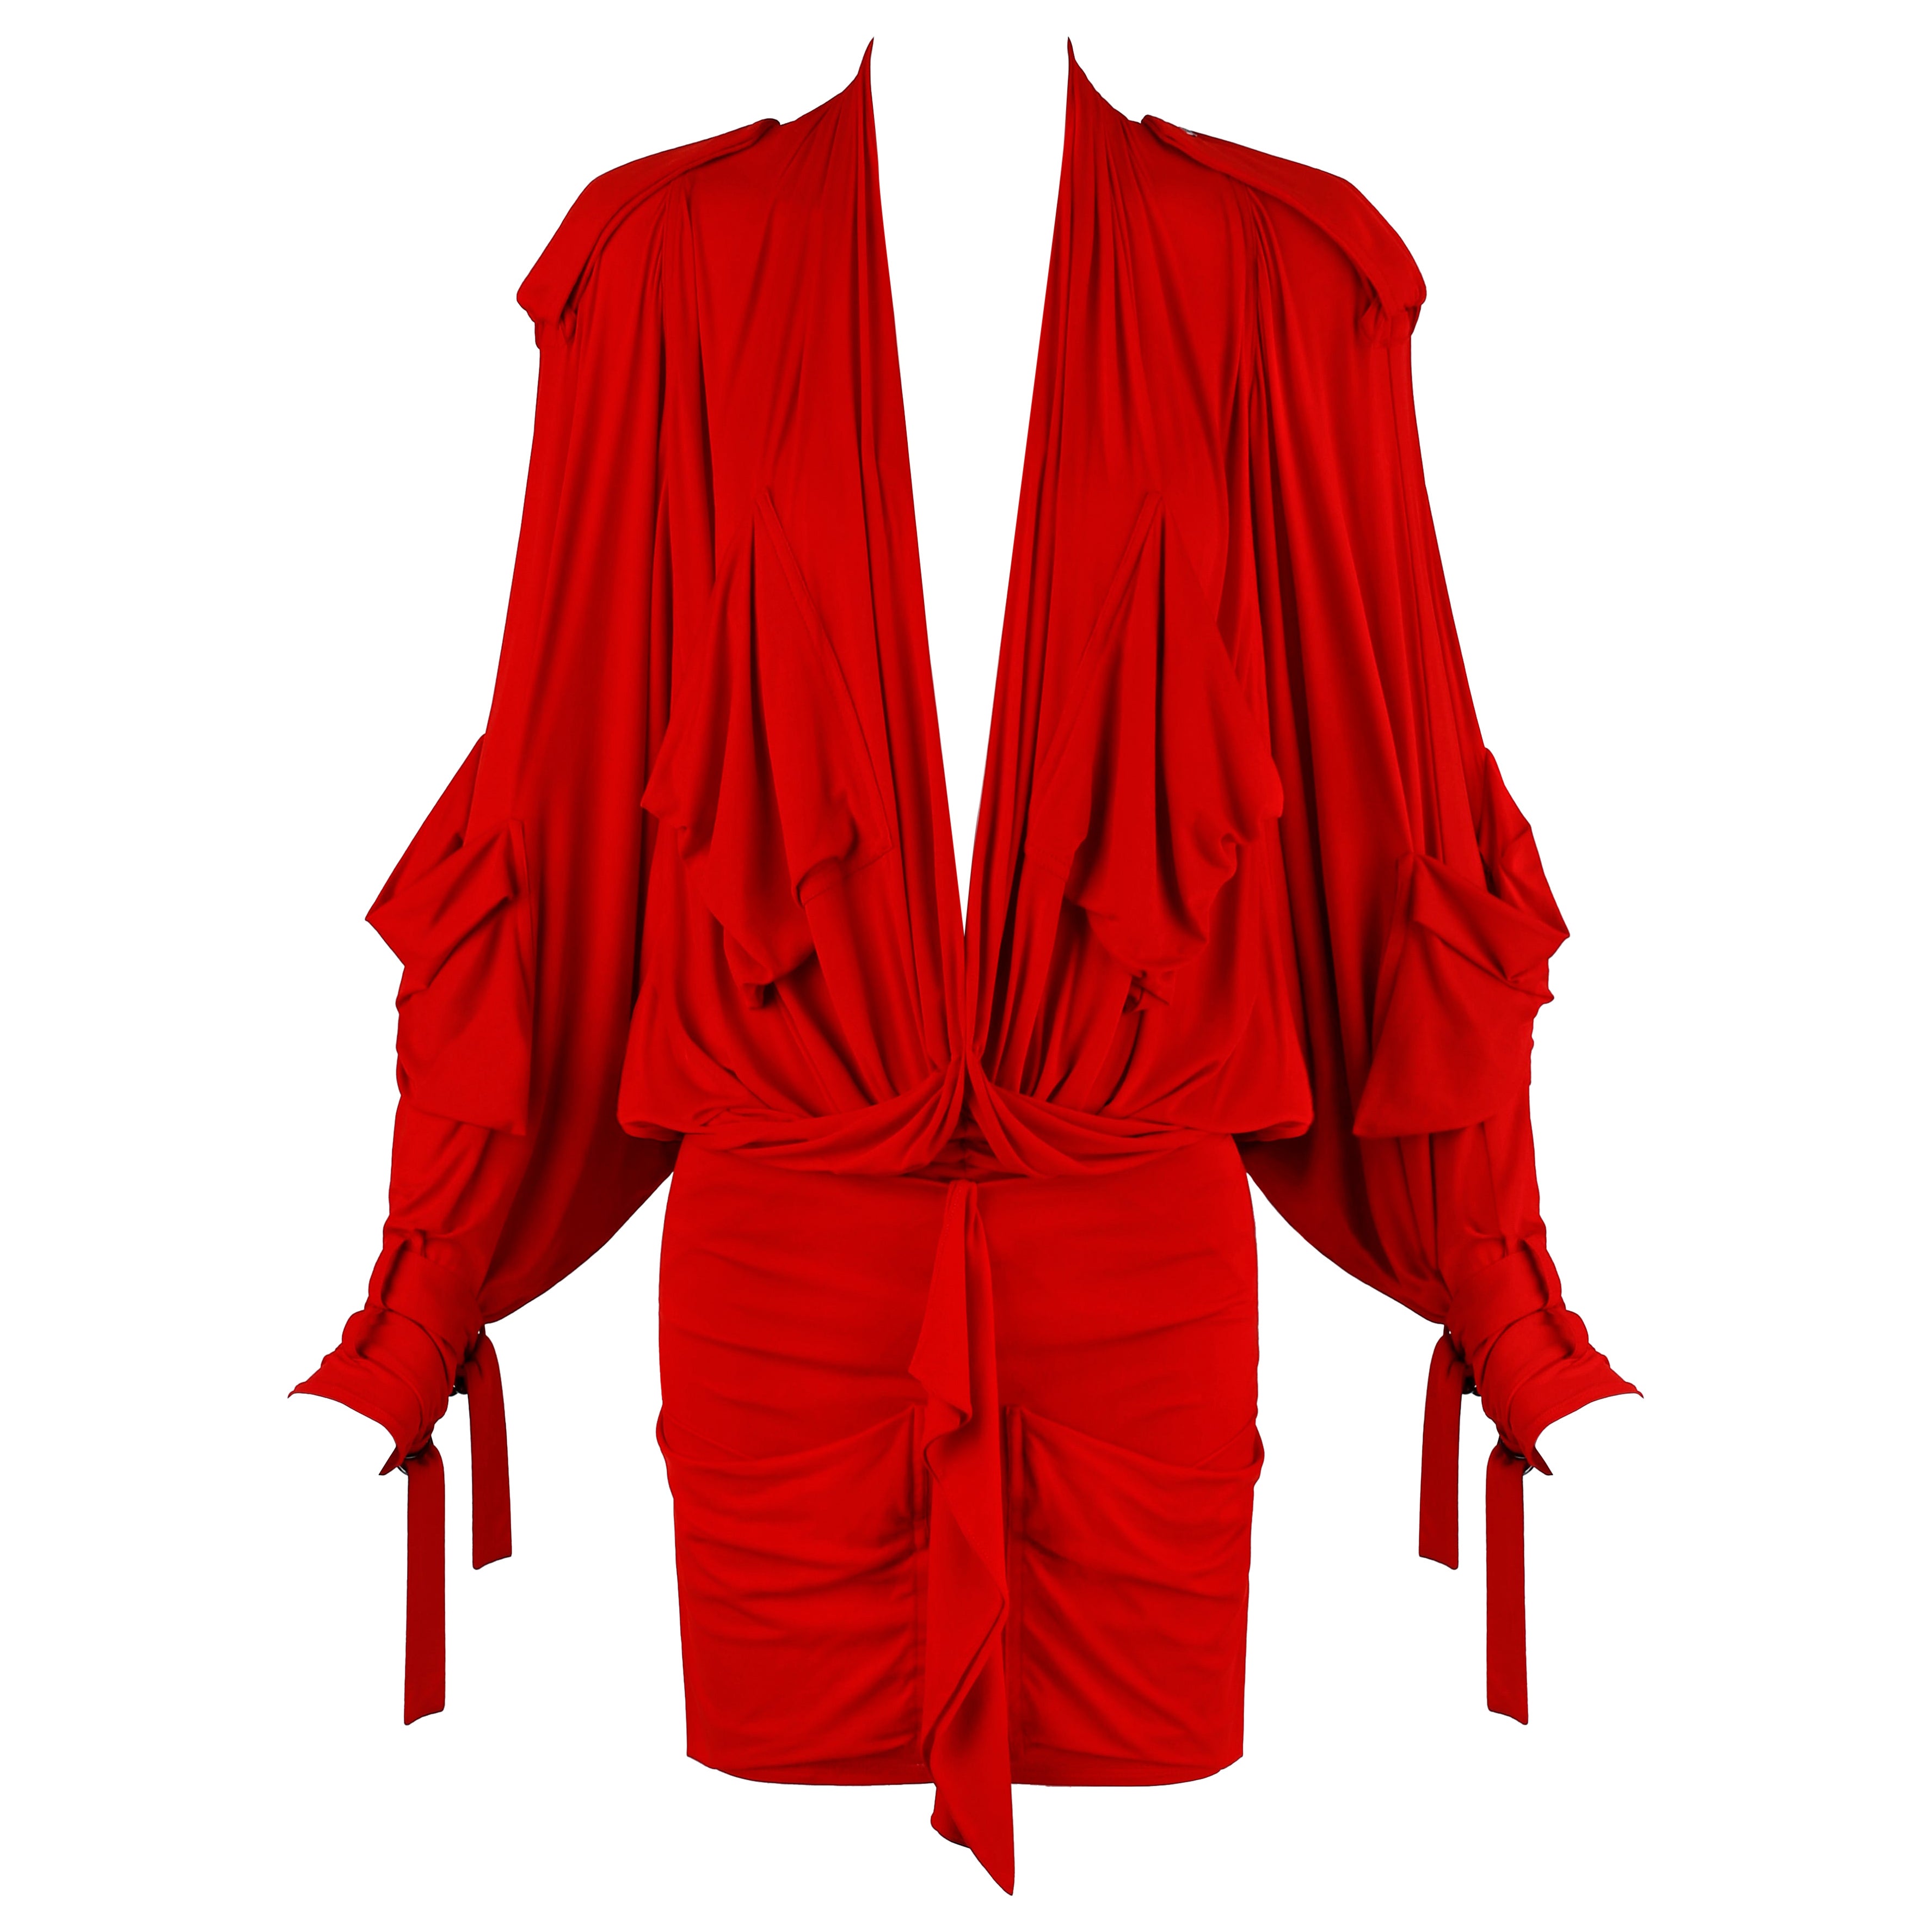 Christian Dior John Galliano S/S 2003 Red Plunge Draped Pocket Mini Dress